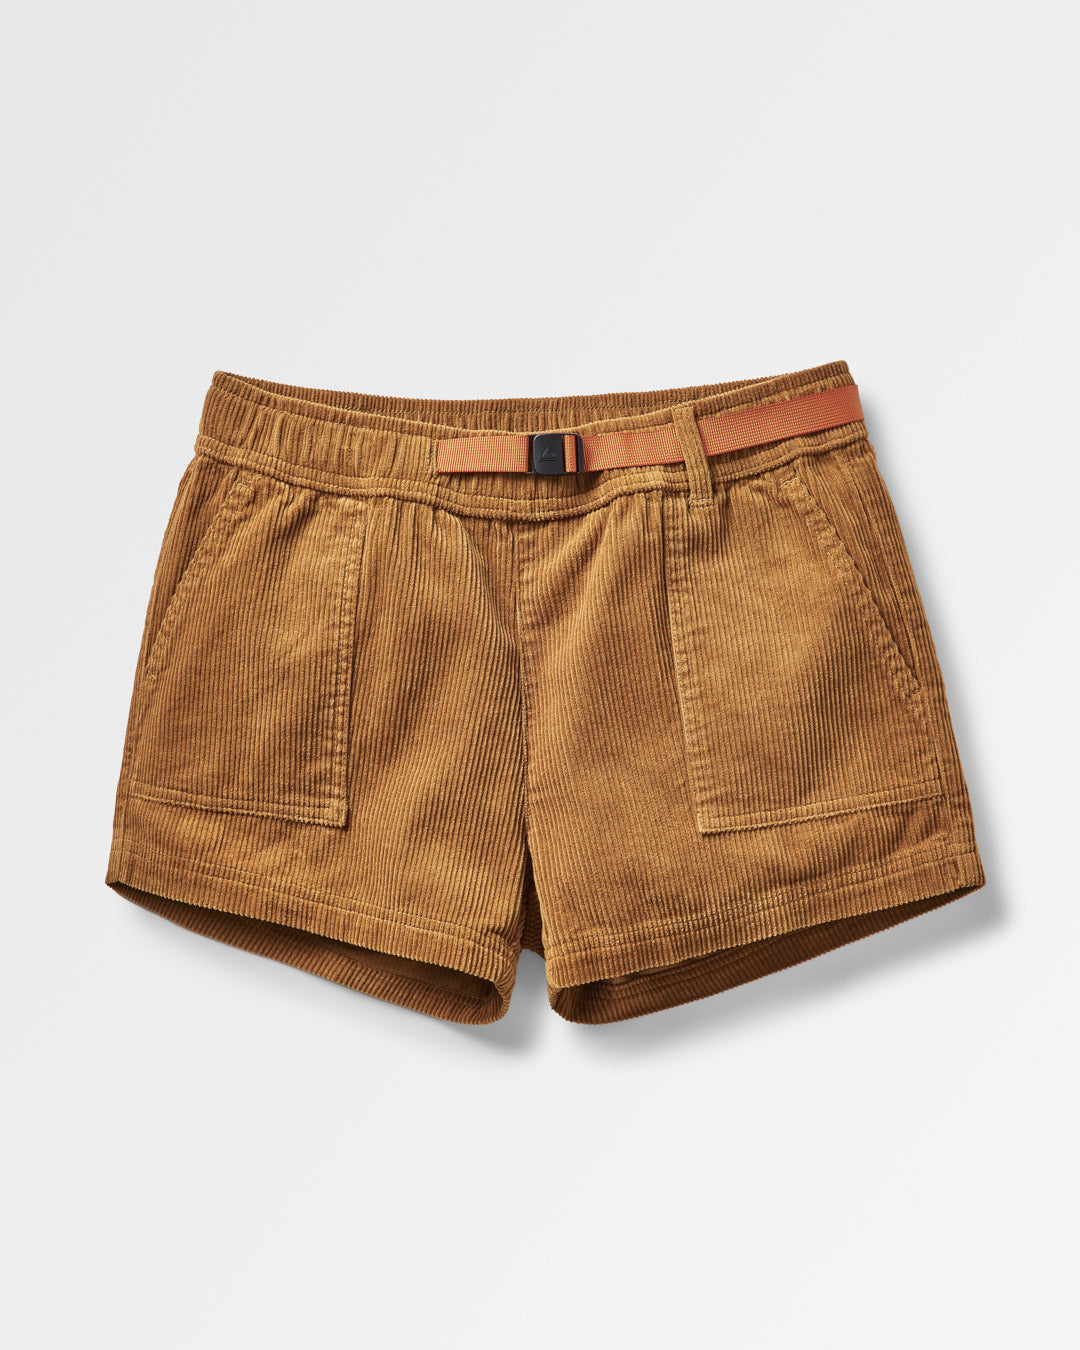 Del Sur Cord Shorts - Tapenade